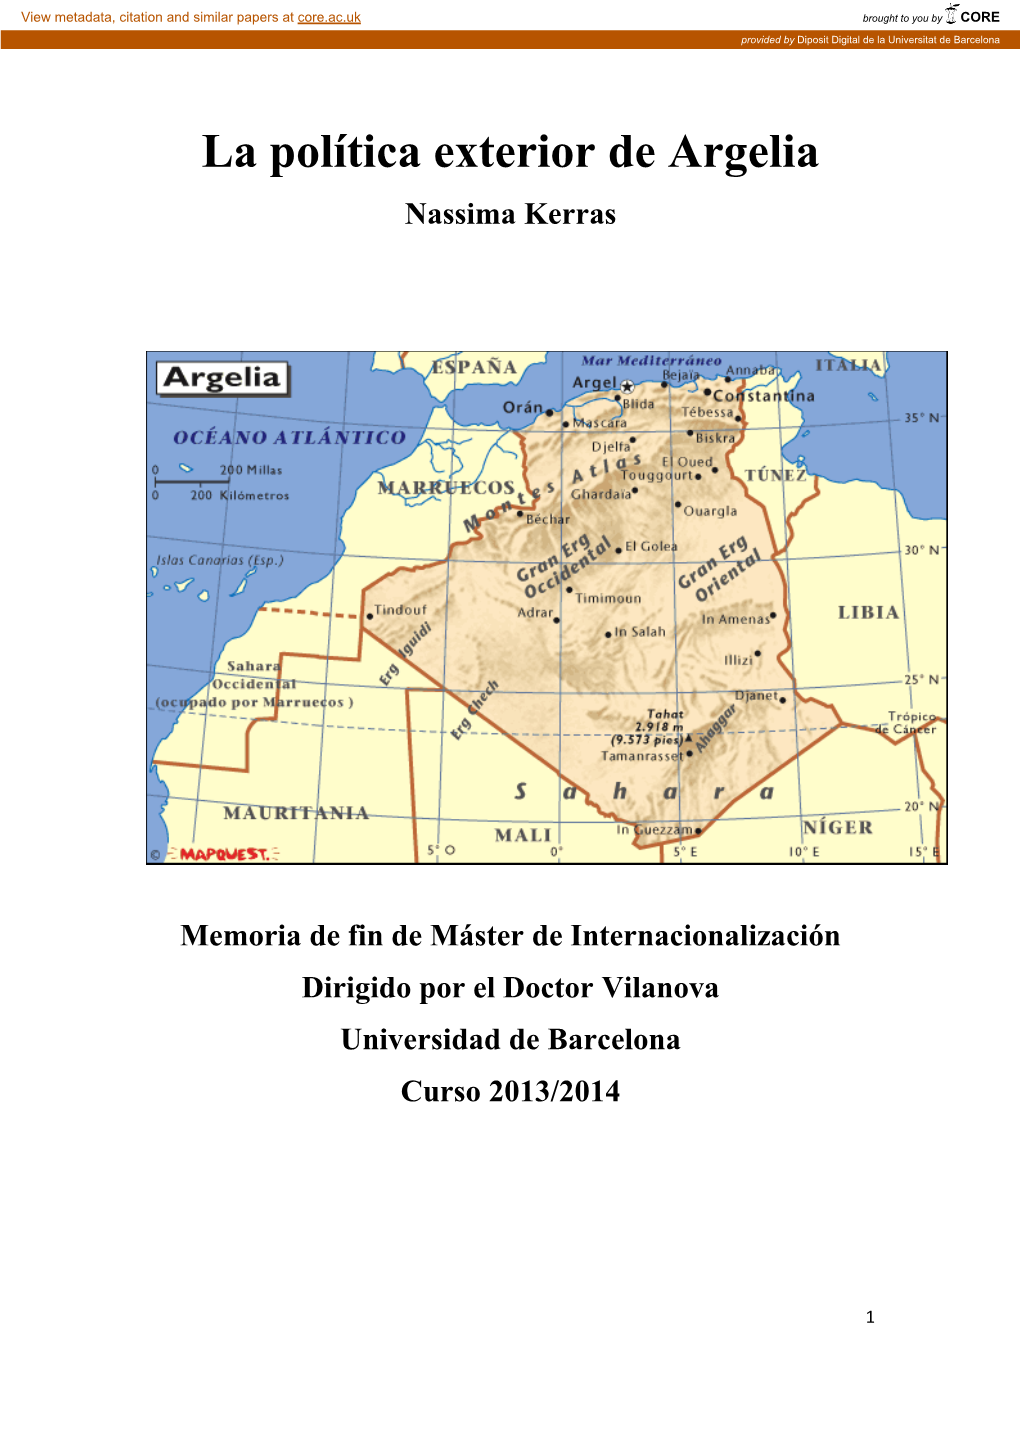 La Política Exterior De Argelia Nassima Kerras